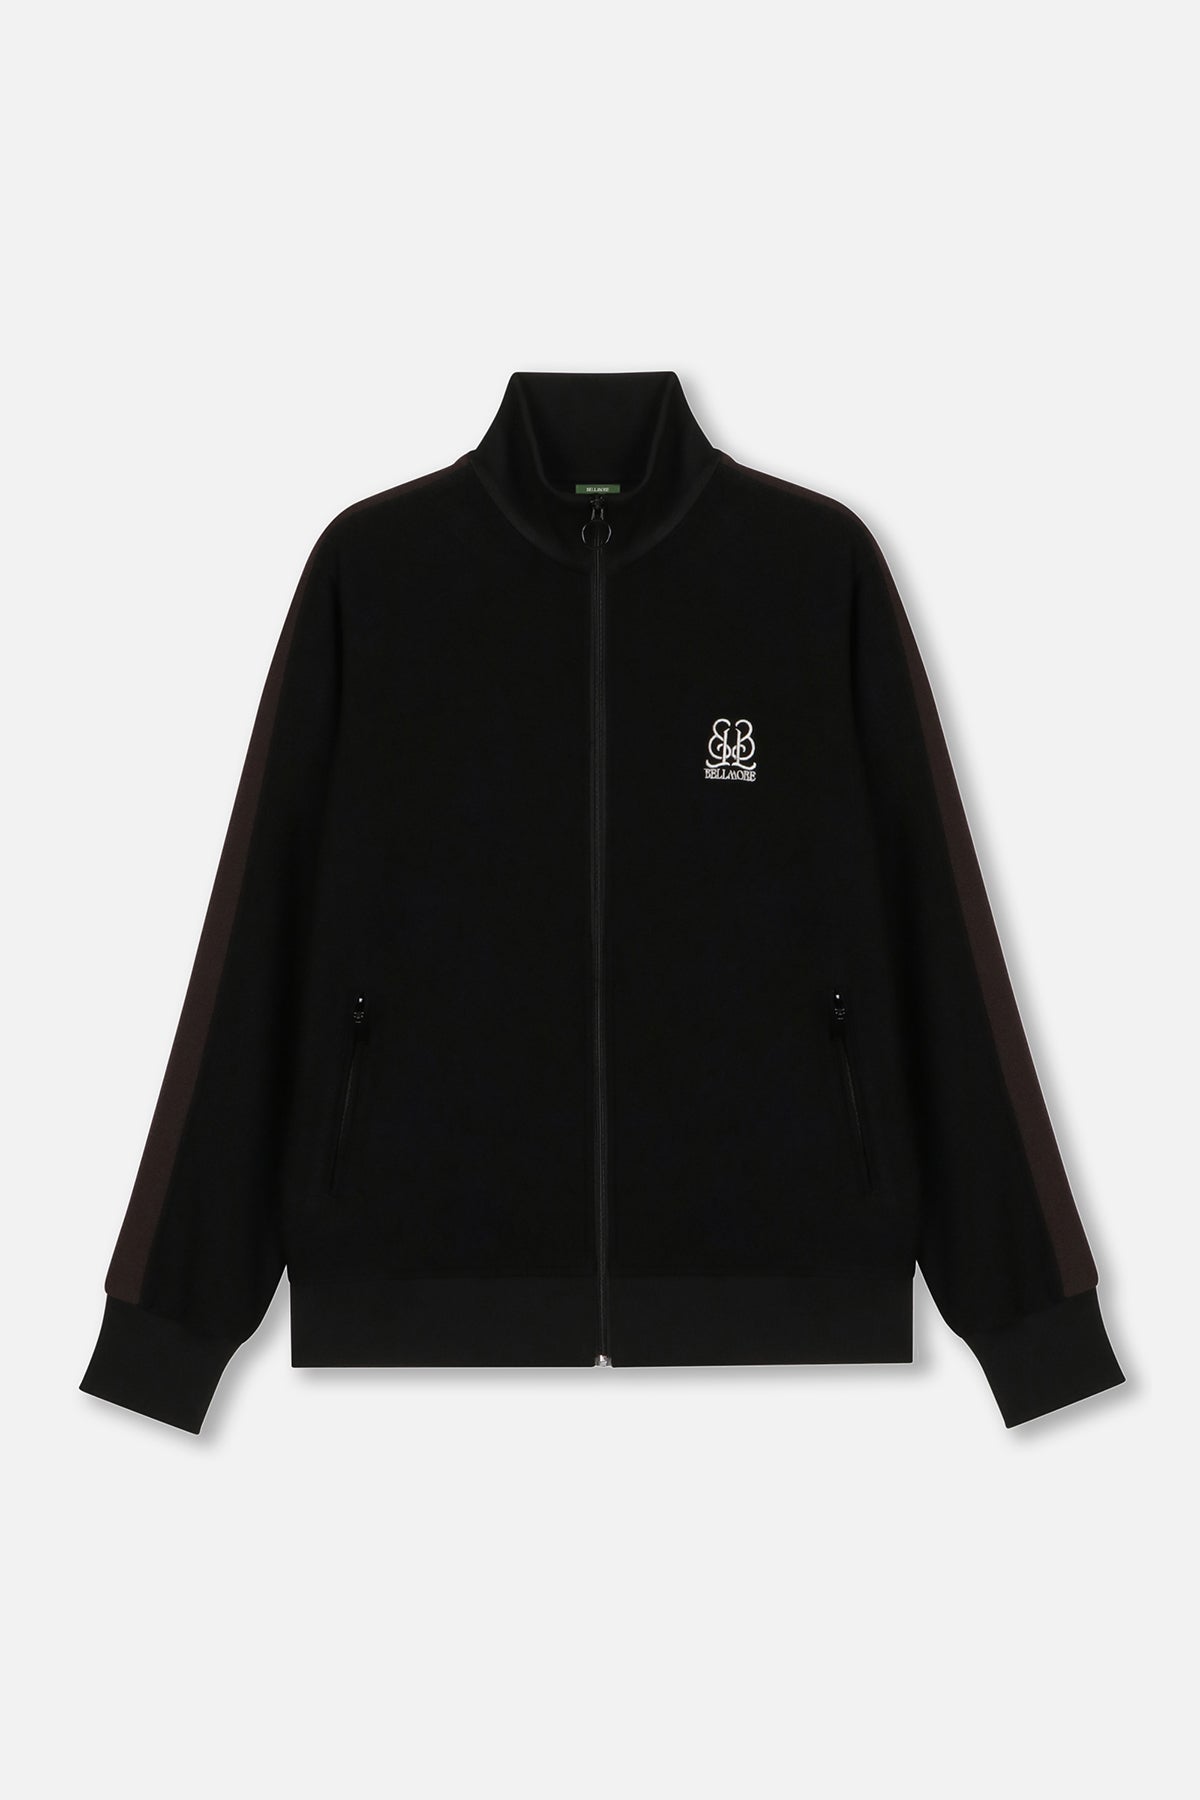 Huberstore【Mサイズ】huber store Emblem Track Jacket